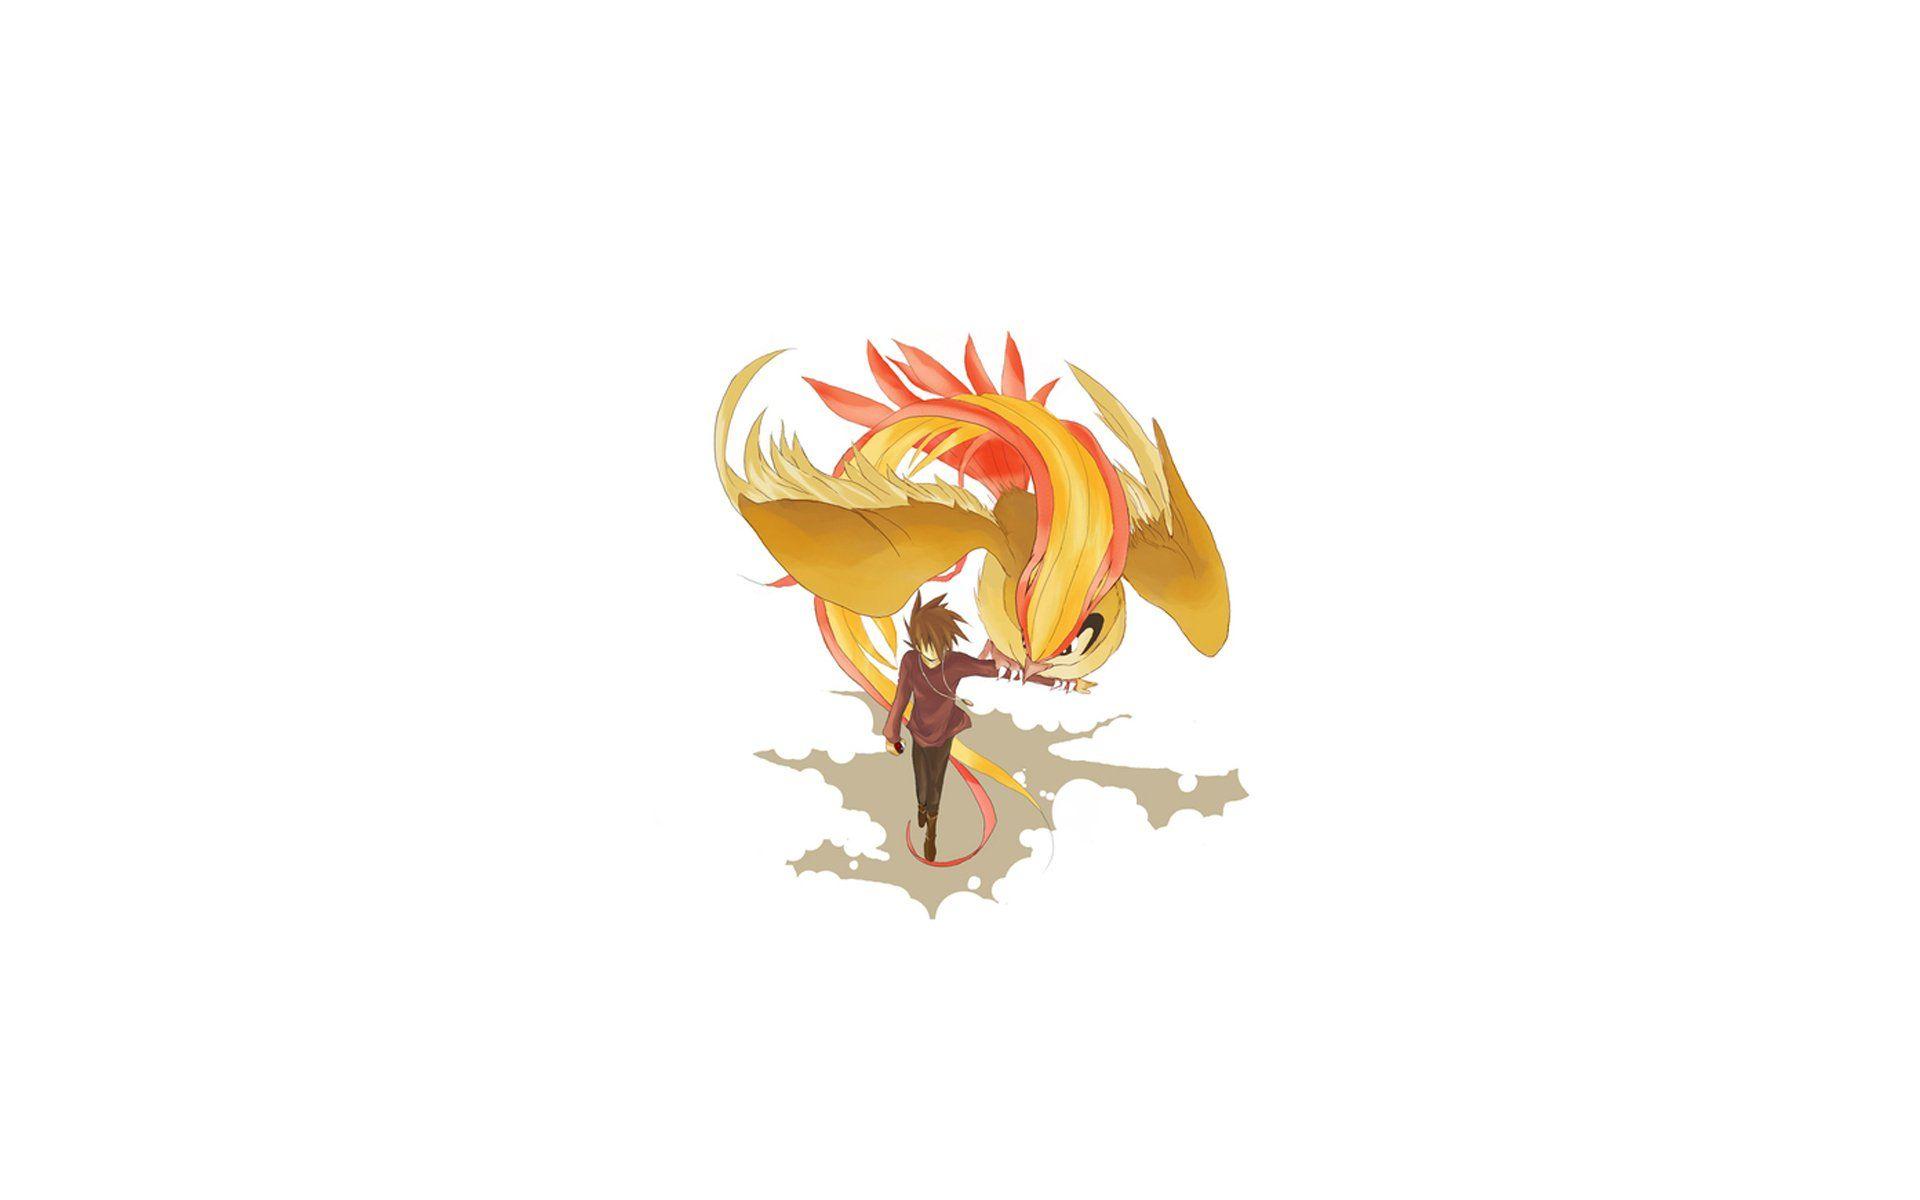 Pidgeot (Pokémon) HD Wallpaper and Background Image